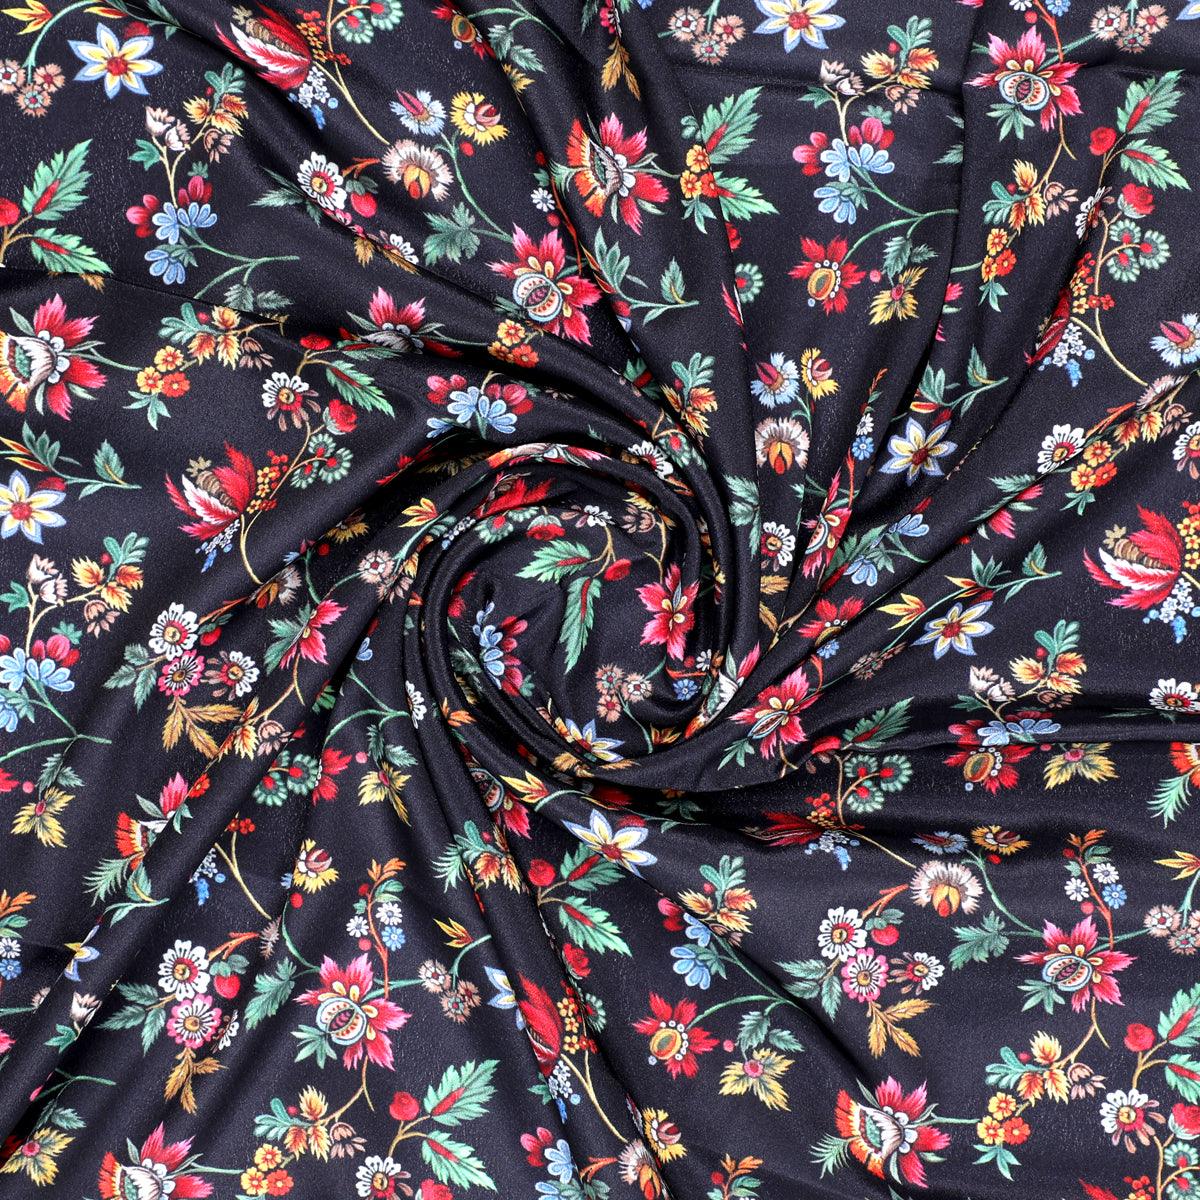 Small Wild Flower Motif Digital Printed Fabric - FAB VOGUE Studio®